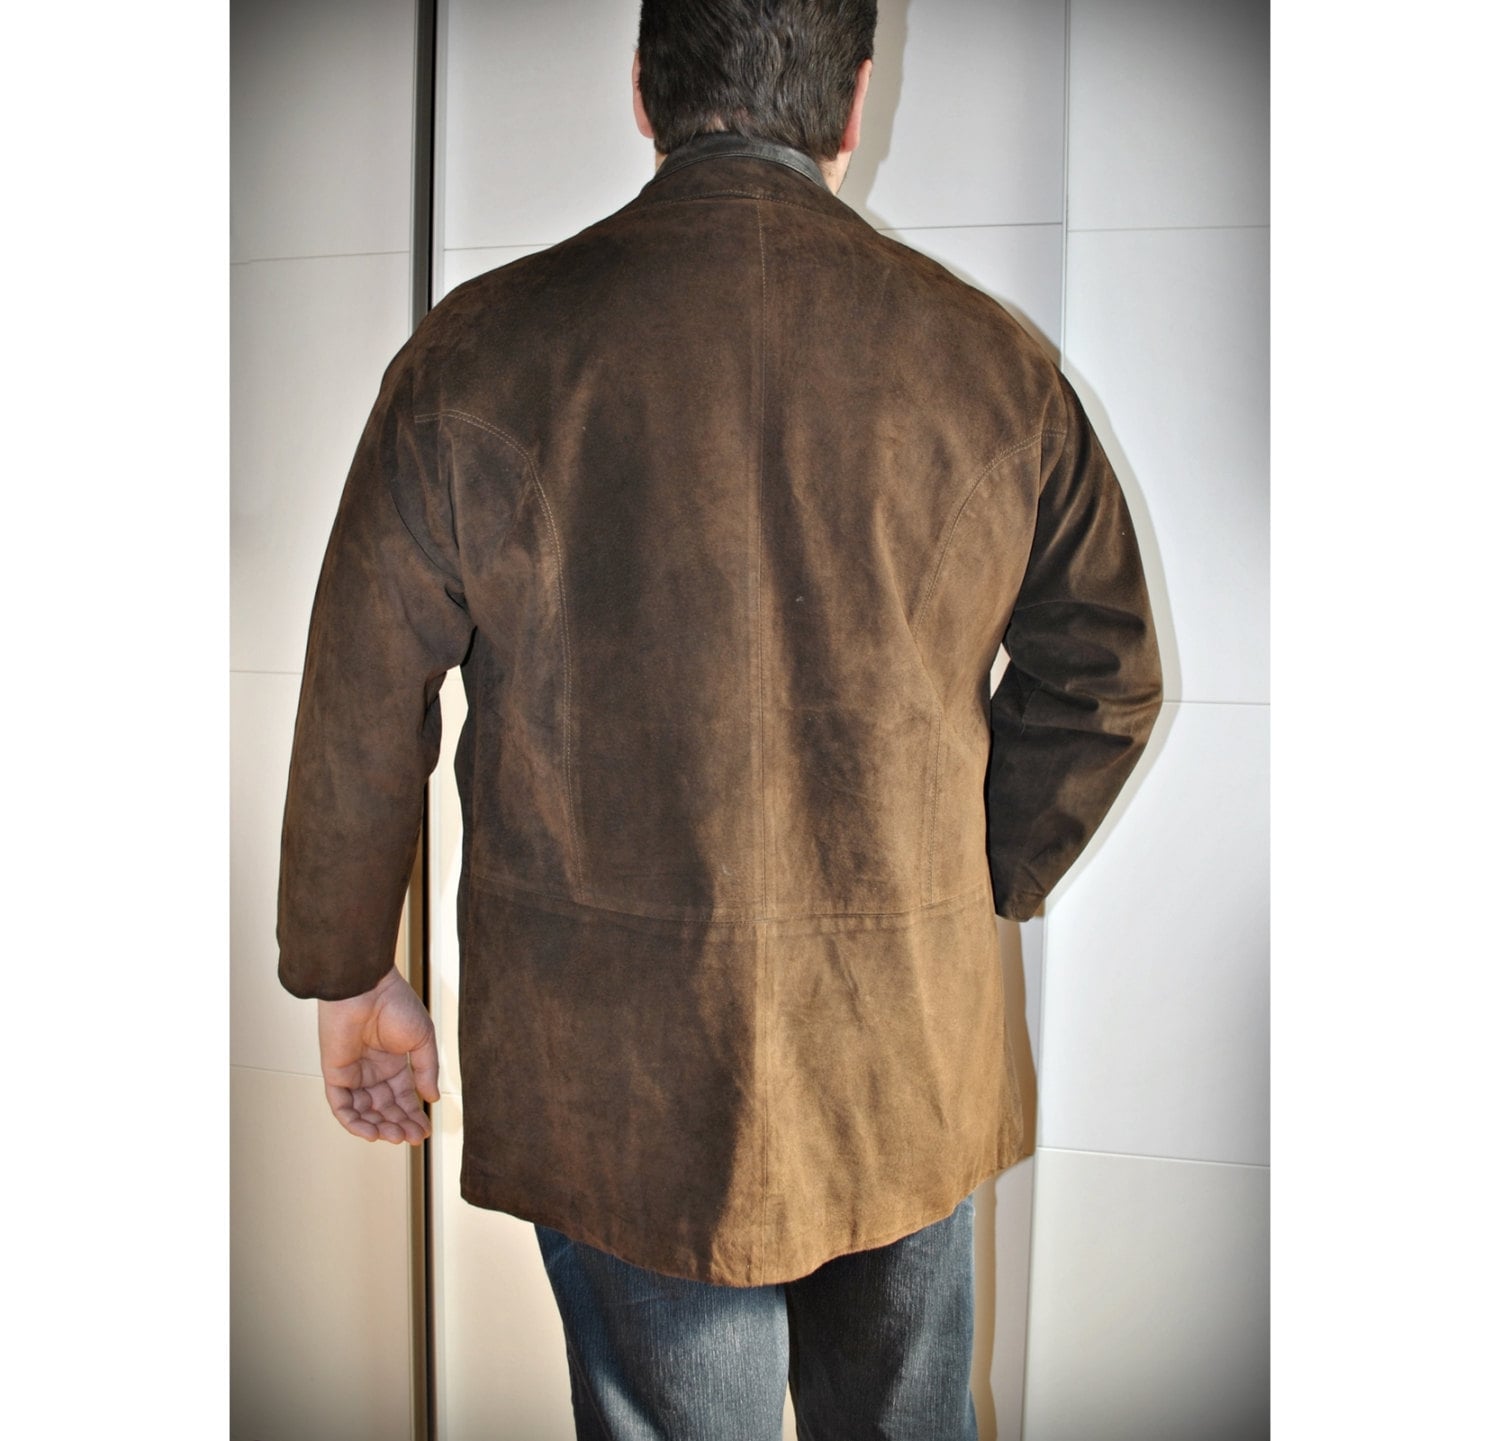 Vintage Men Suede Leather Jacket / Fall Jacket / Trench Coat /